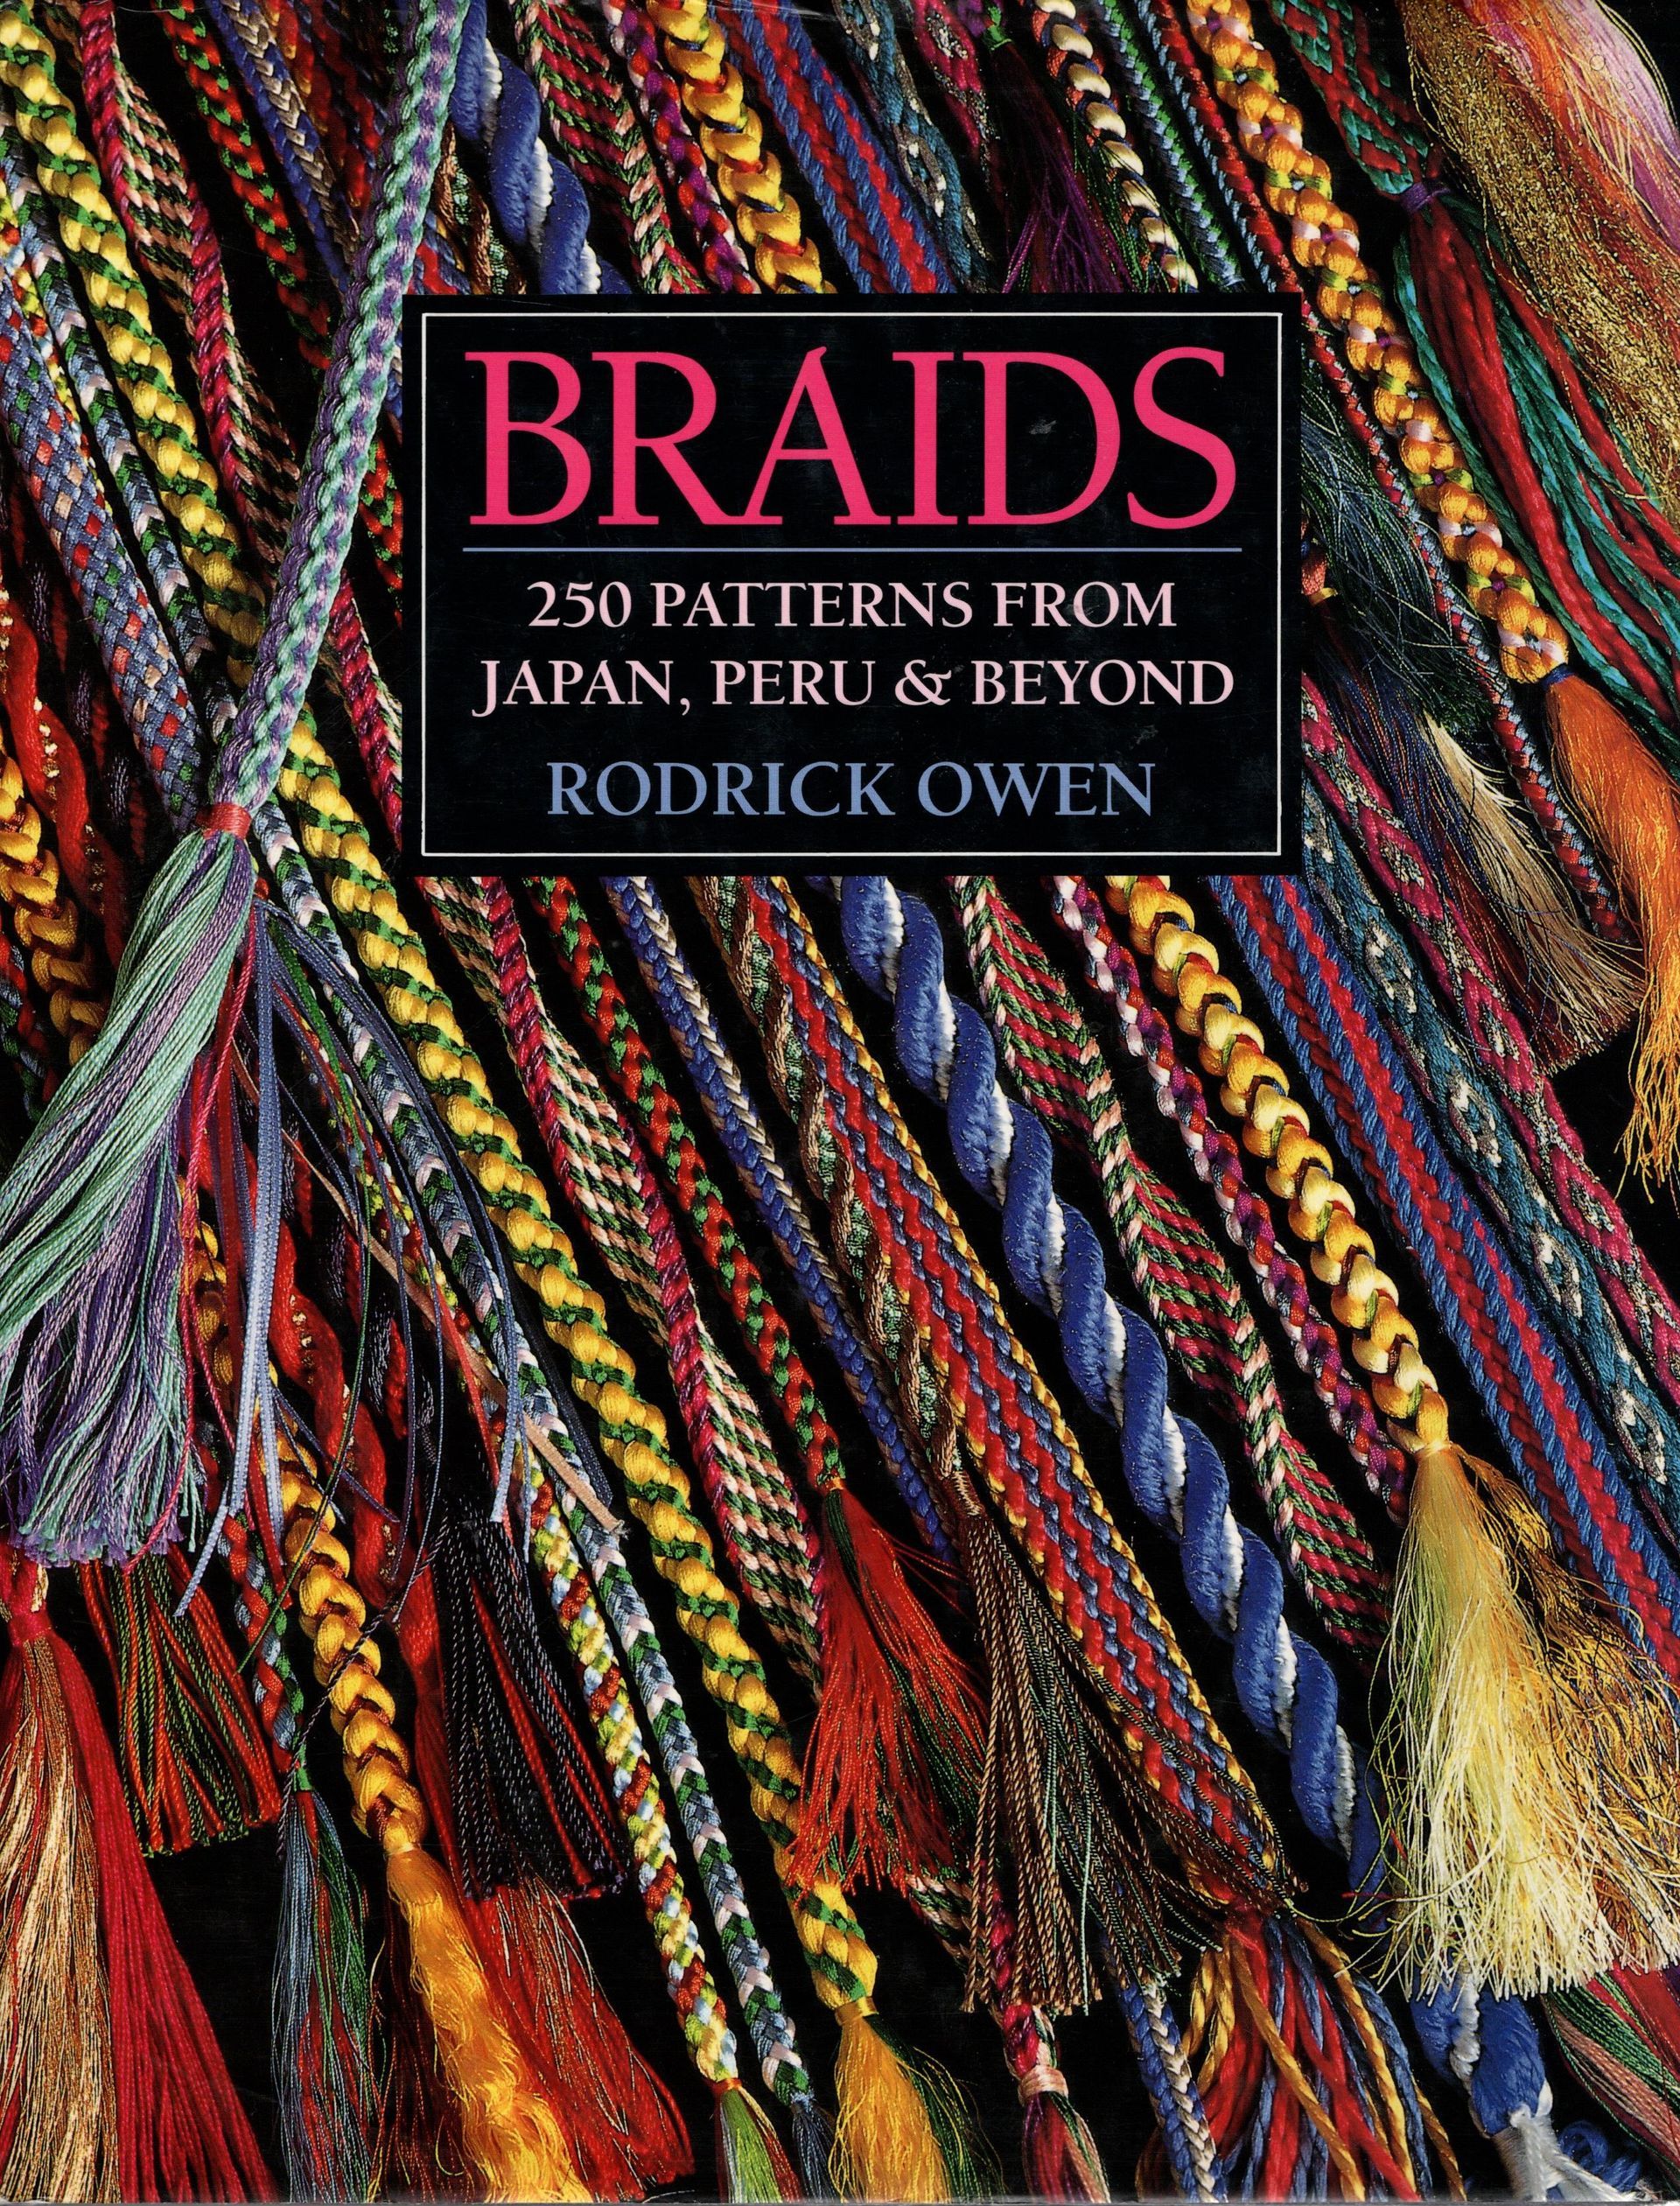 Rodrick Owen's Book, Braids - 250 Patterns from Japan, Peru, and Beyond